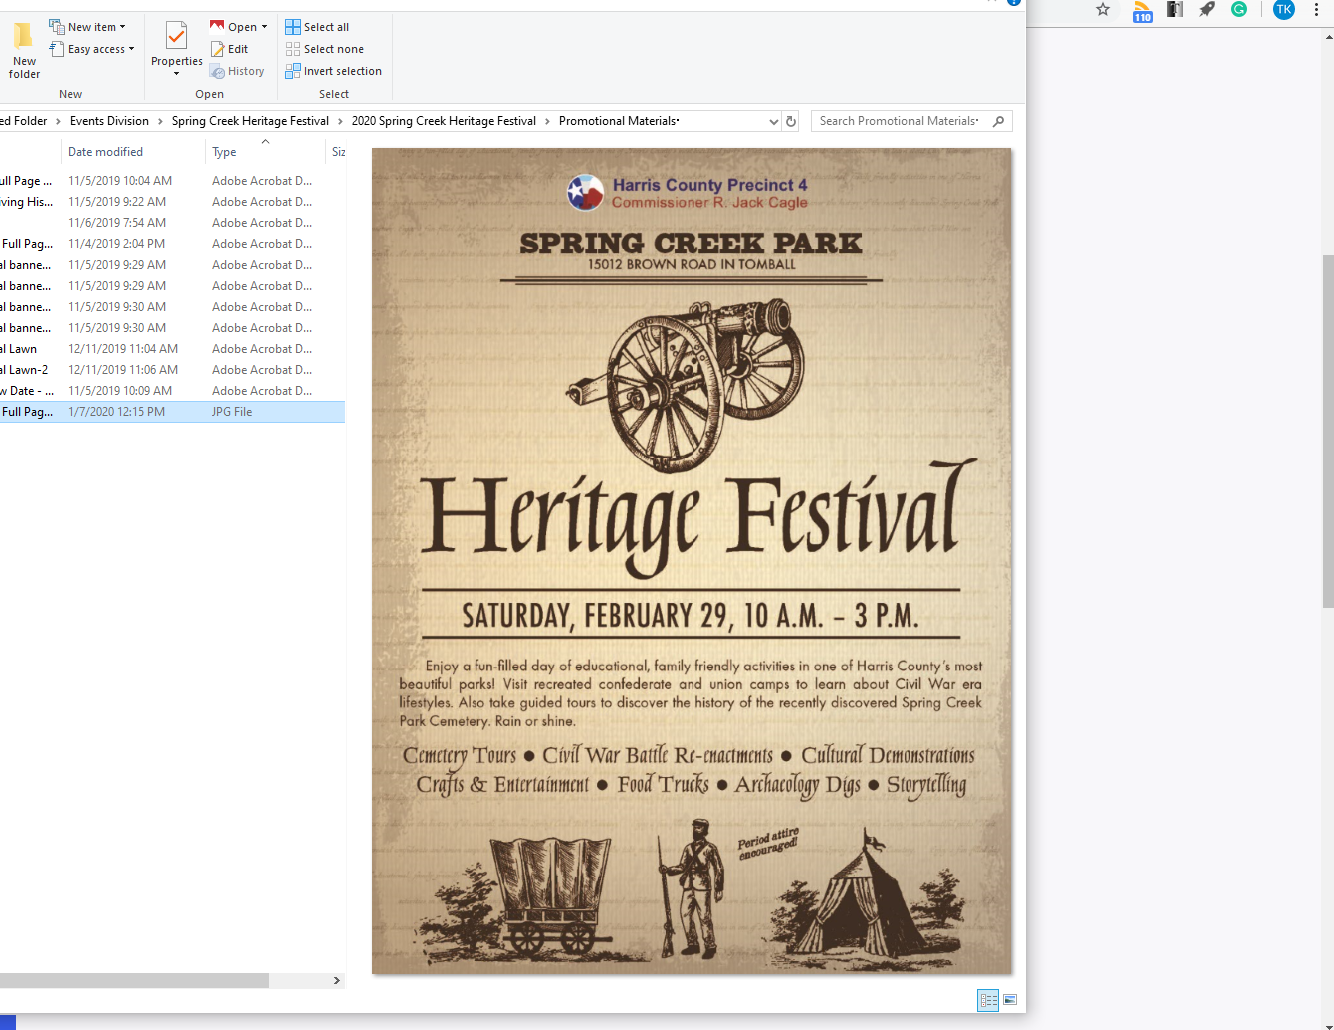 Harris County Precinct 4's Spring Creek Park Heritage Festival 